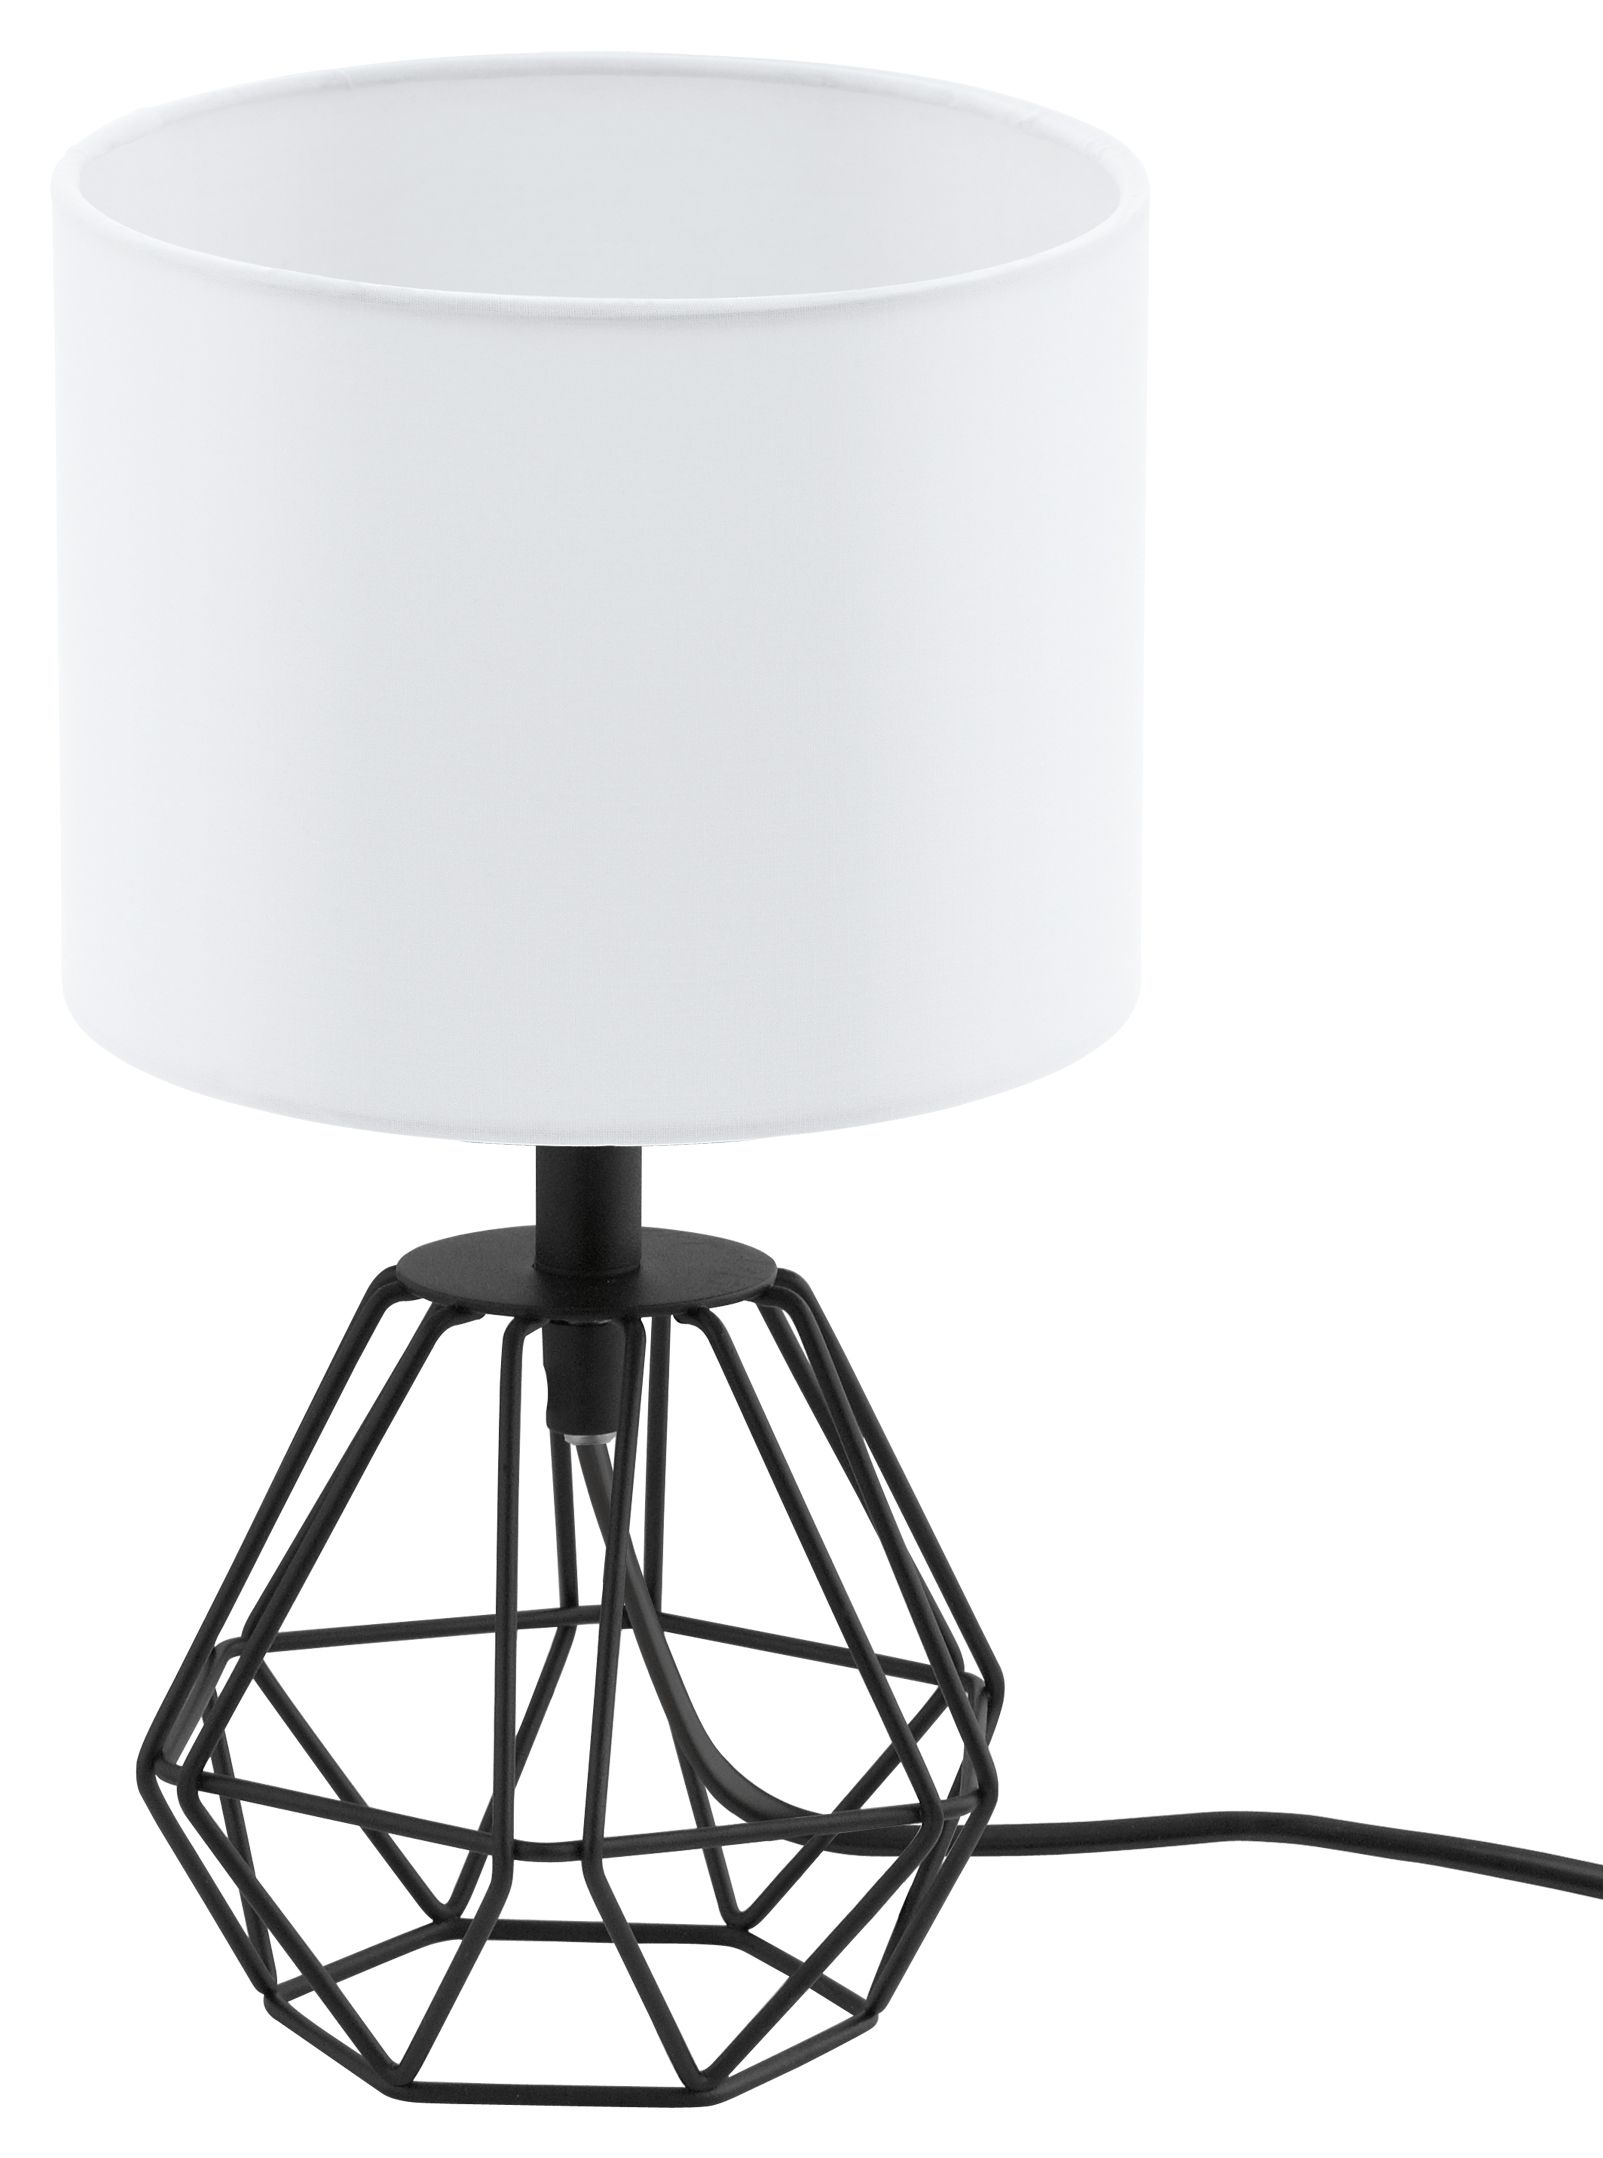 Image of Eglo Carlton 2 Table Lamp - Black & Whiite